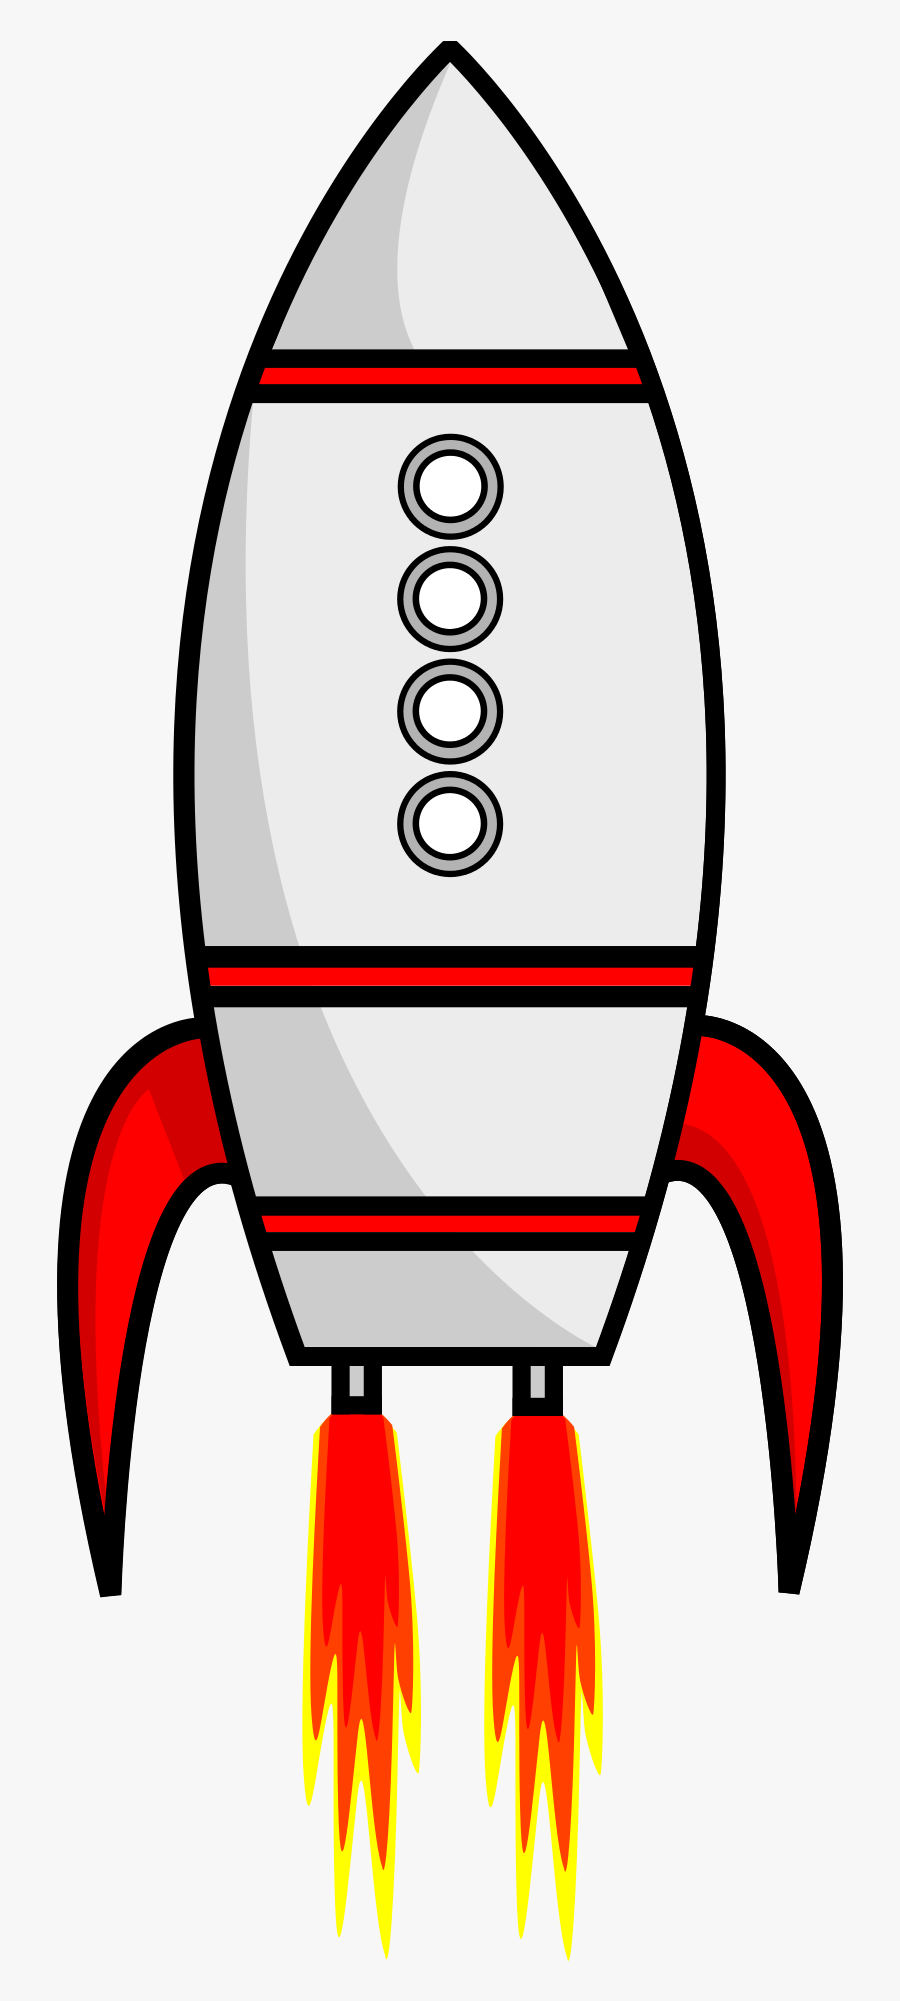 Rocket Vectot Png Transparent Image - Rocket Transparent, Transparent Clipart